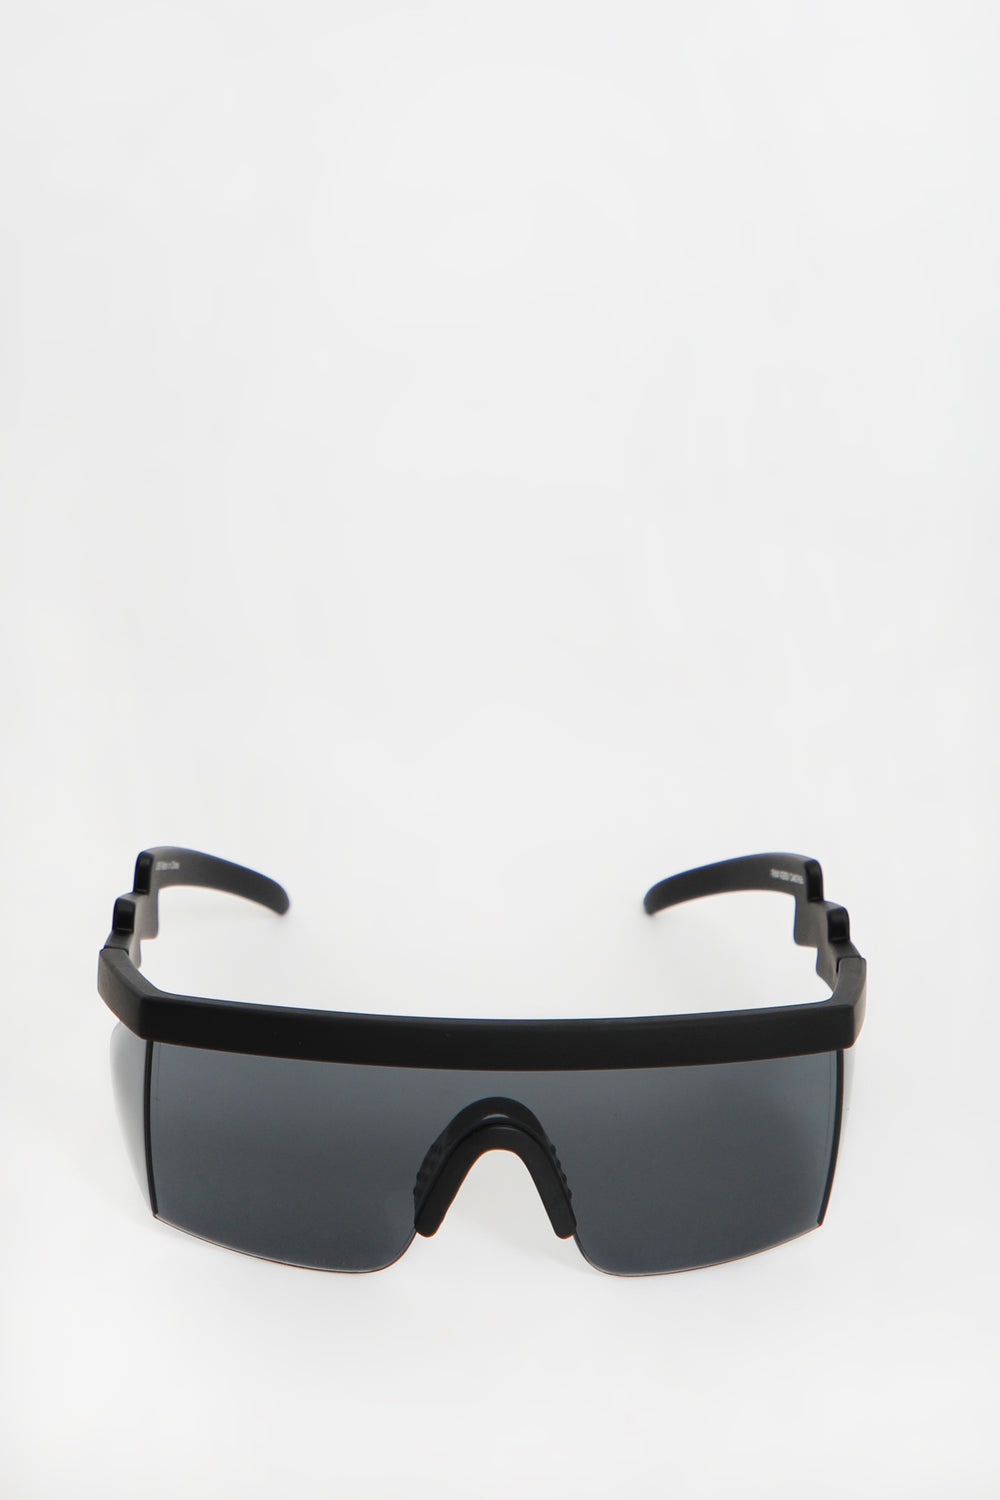 West49 Black Shield Sunglasses West49 Black Shield Sunglasses